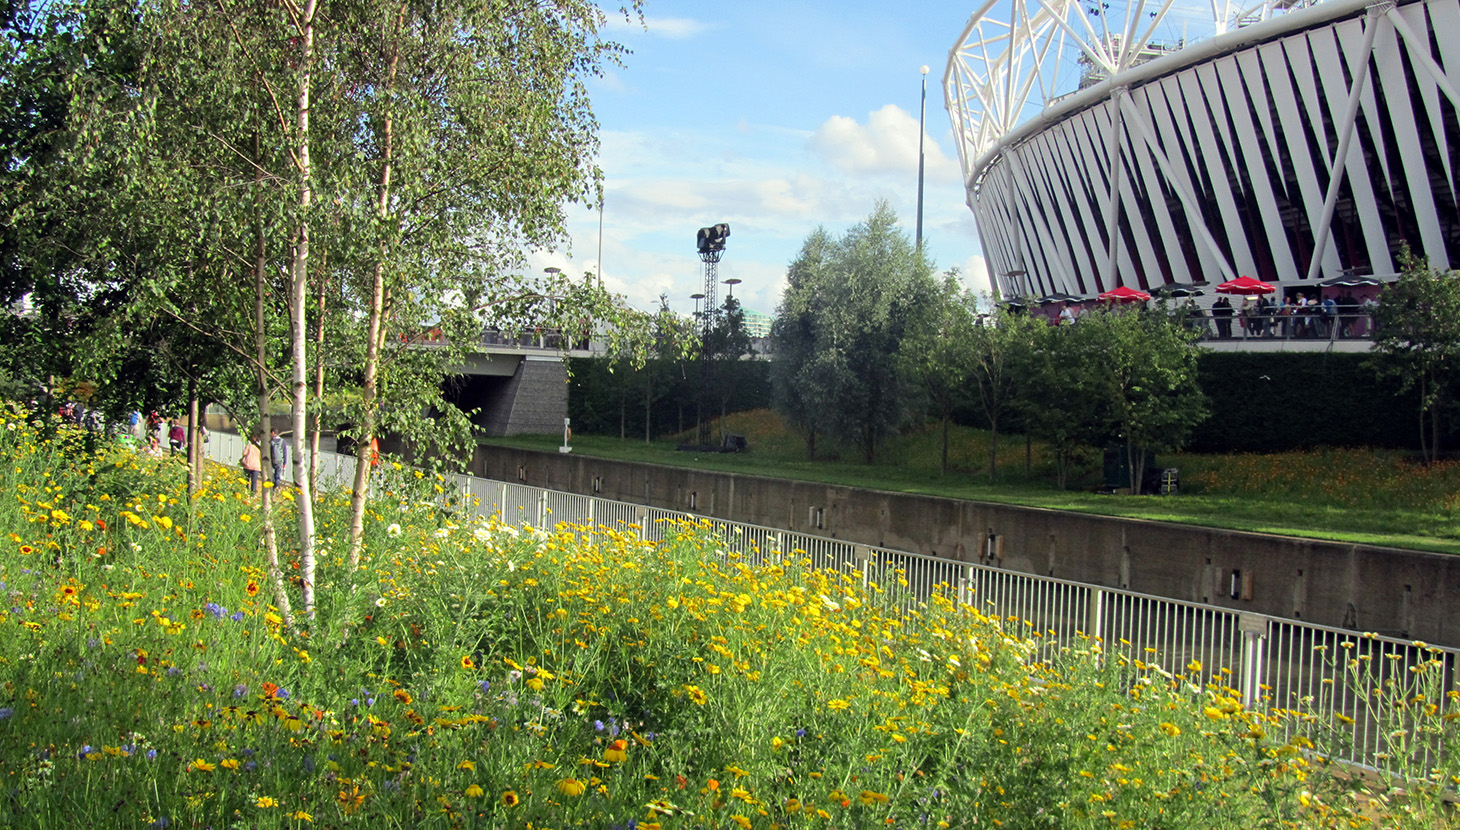 The Olympic Stadium and City Mill River. ph. David Jones (Flickr)